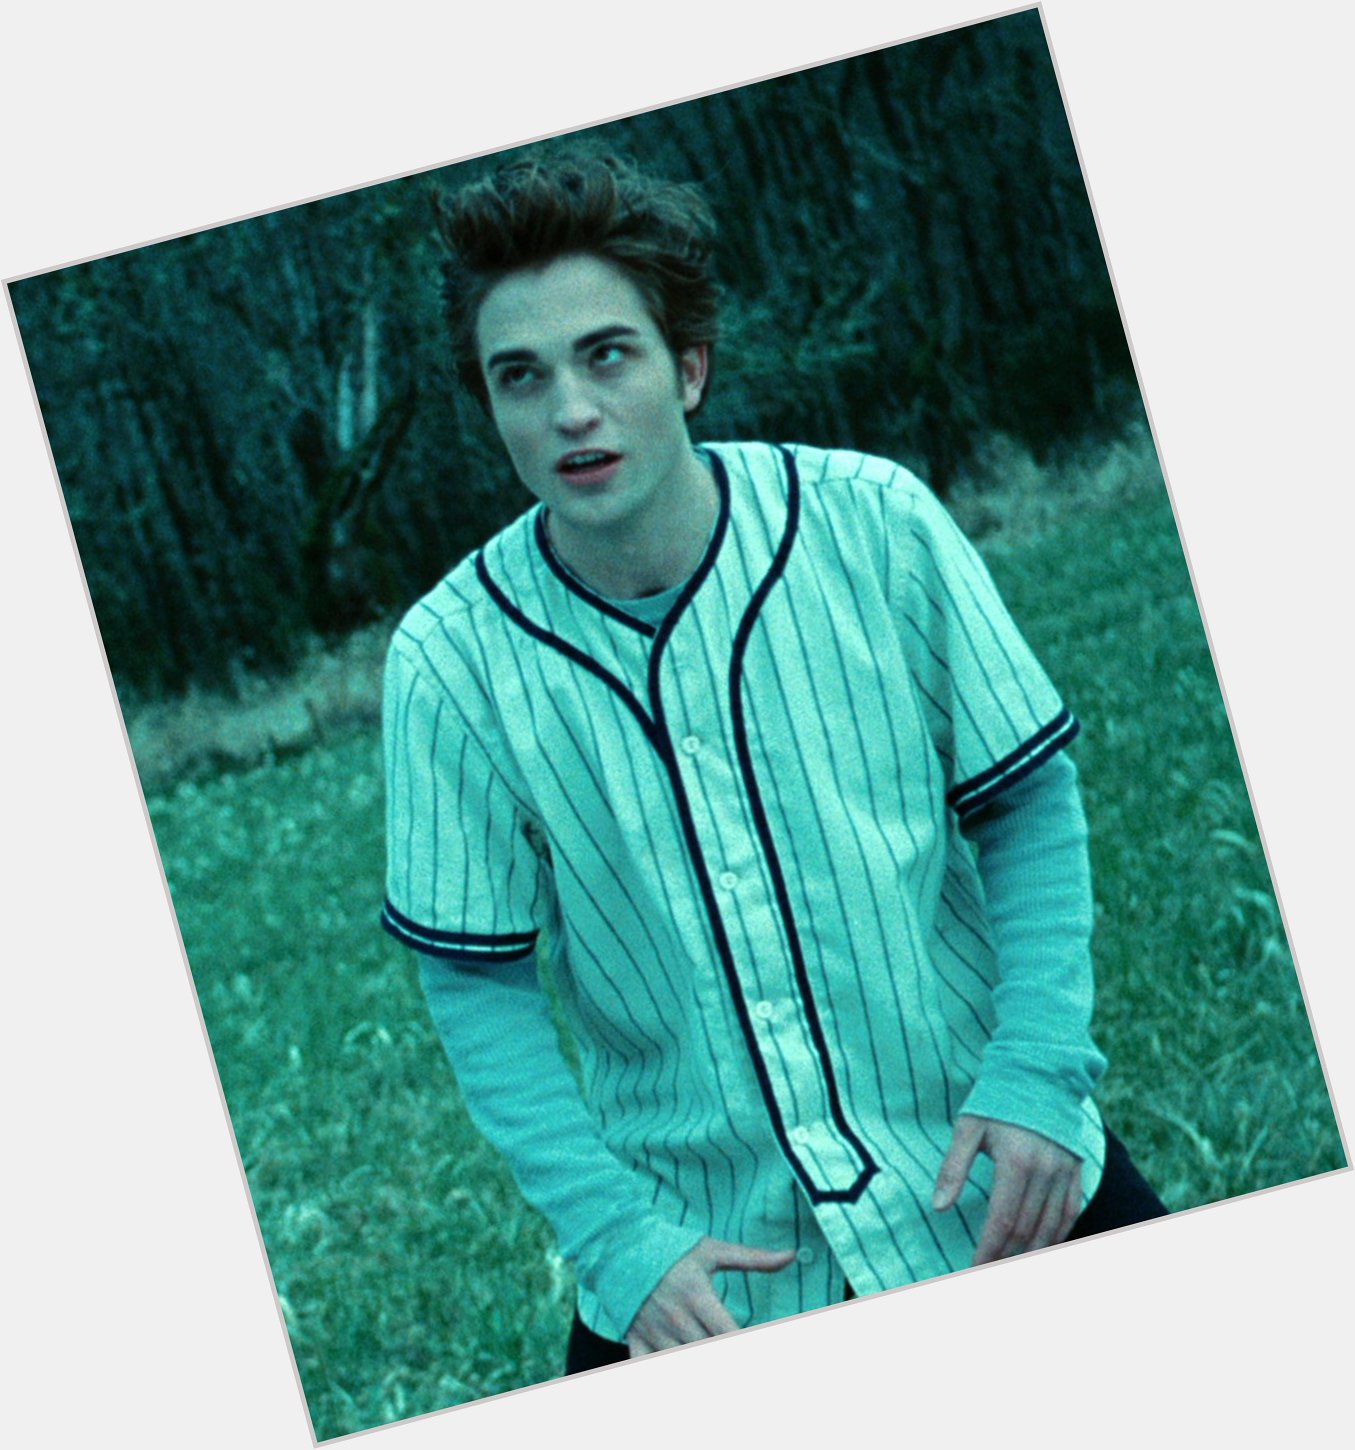 Happy birthday to the worlds best baseball player, Robert Pattinson 